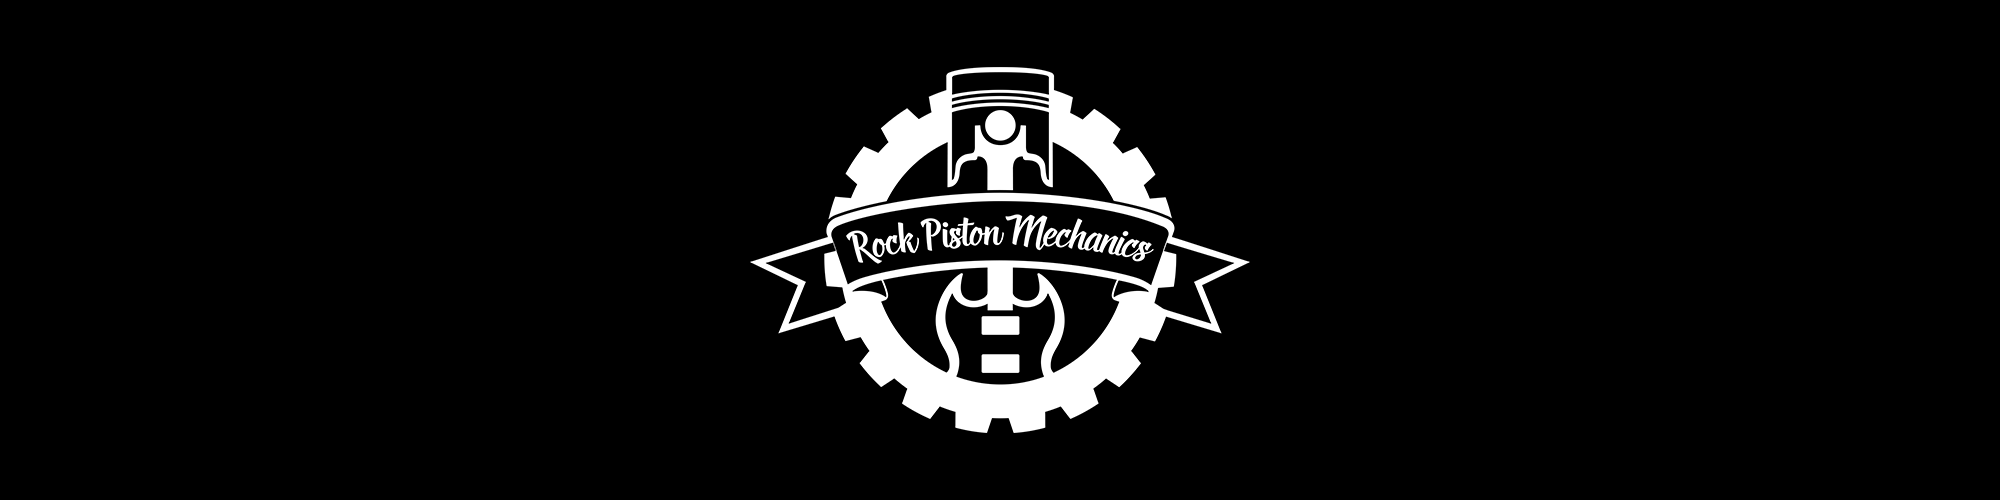 Rock Piston Mechanics